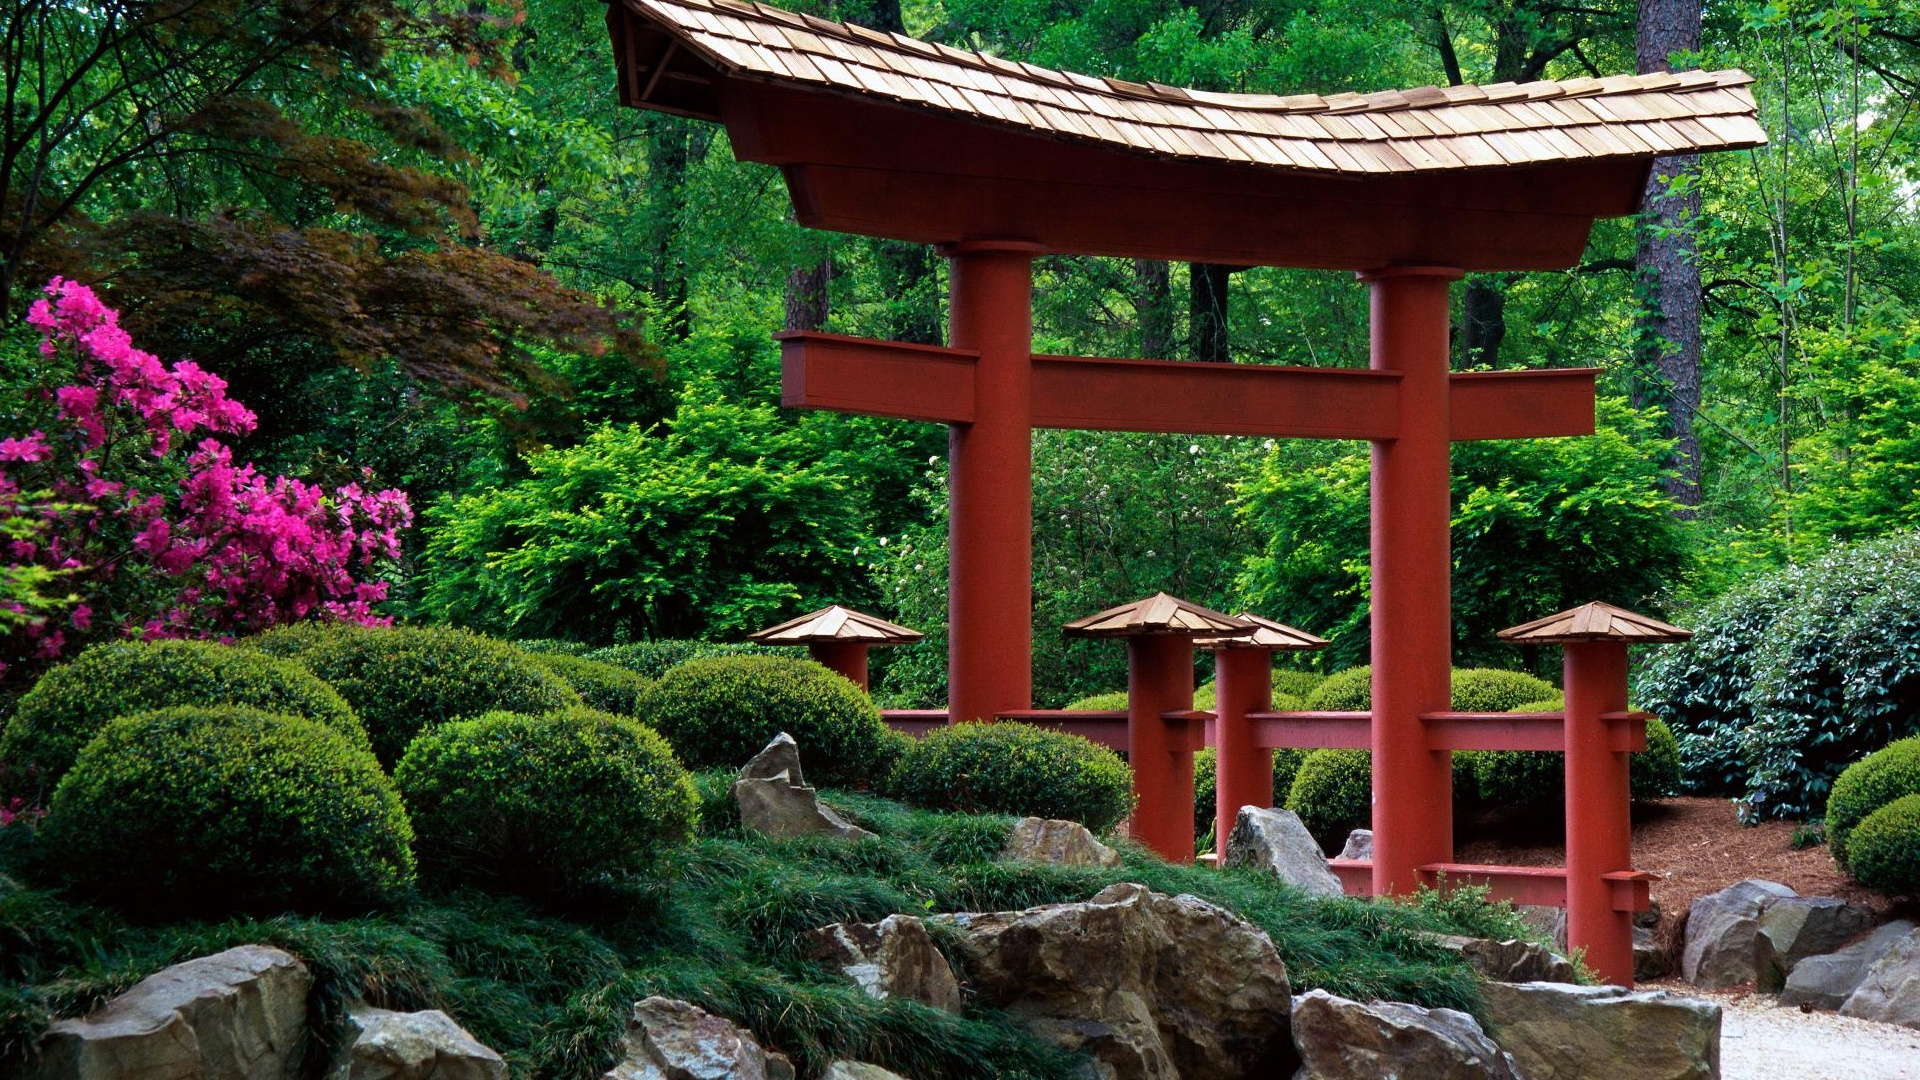 General 1920x1080 nature landscape Asian architecture torii